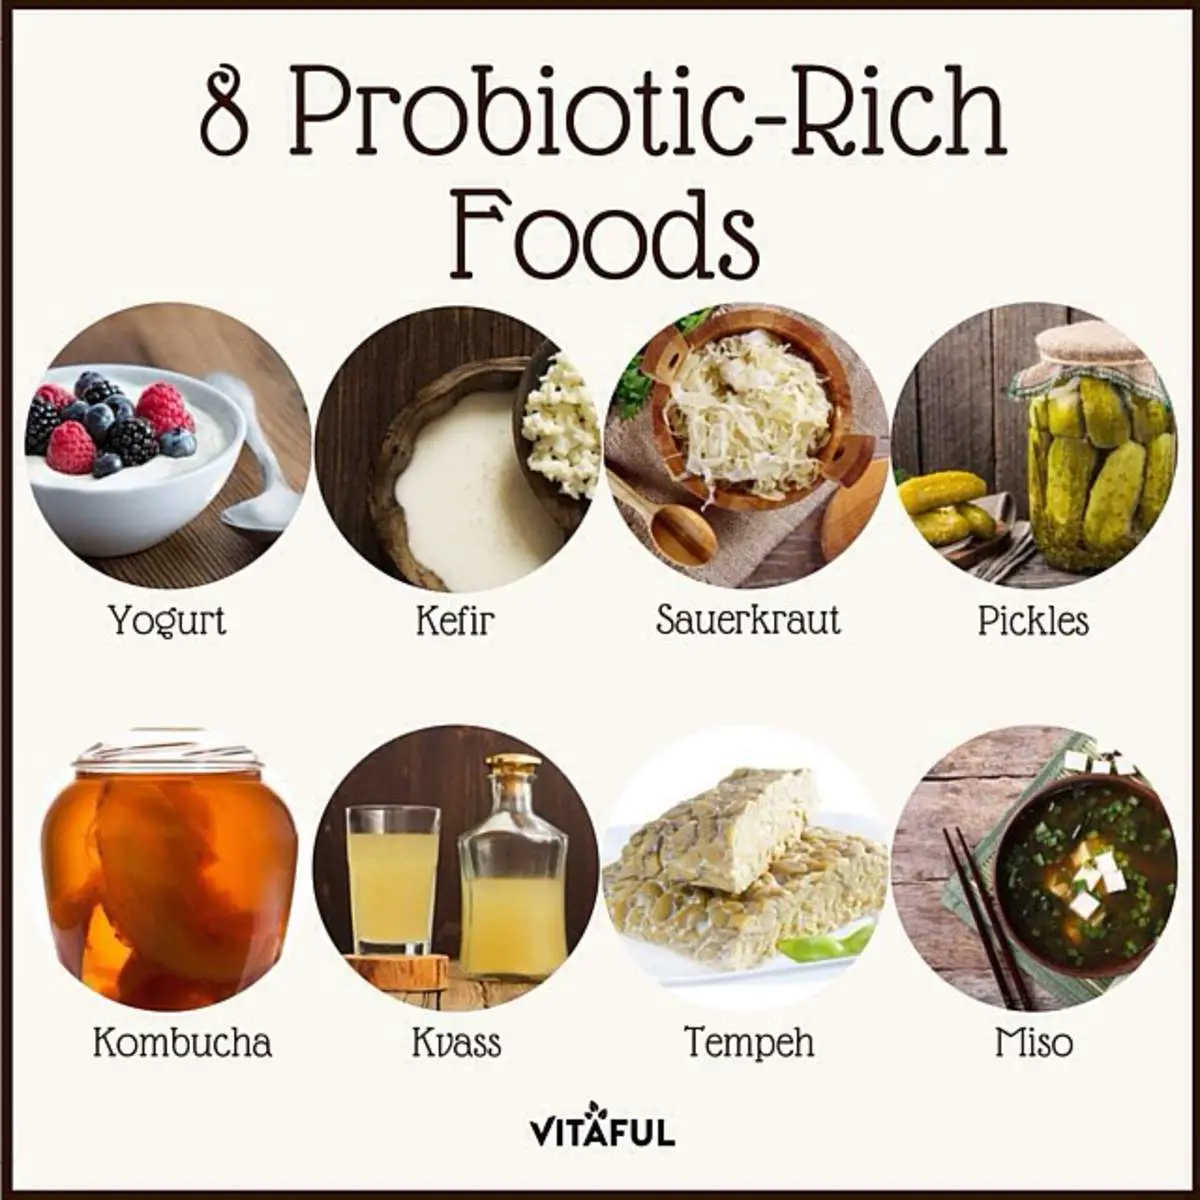 20 Benefits of Taking Probiotics